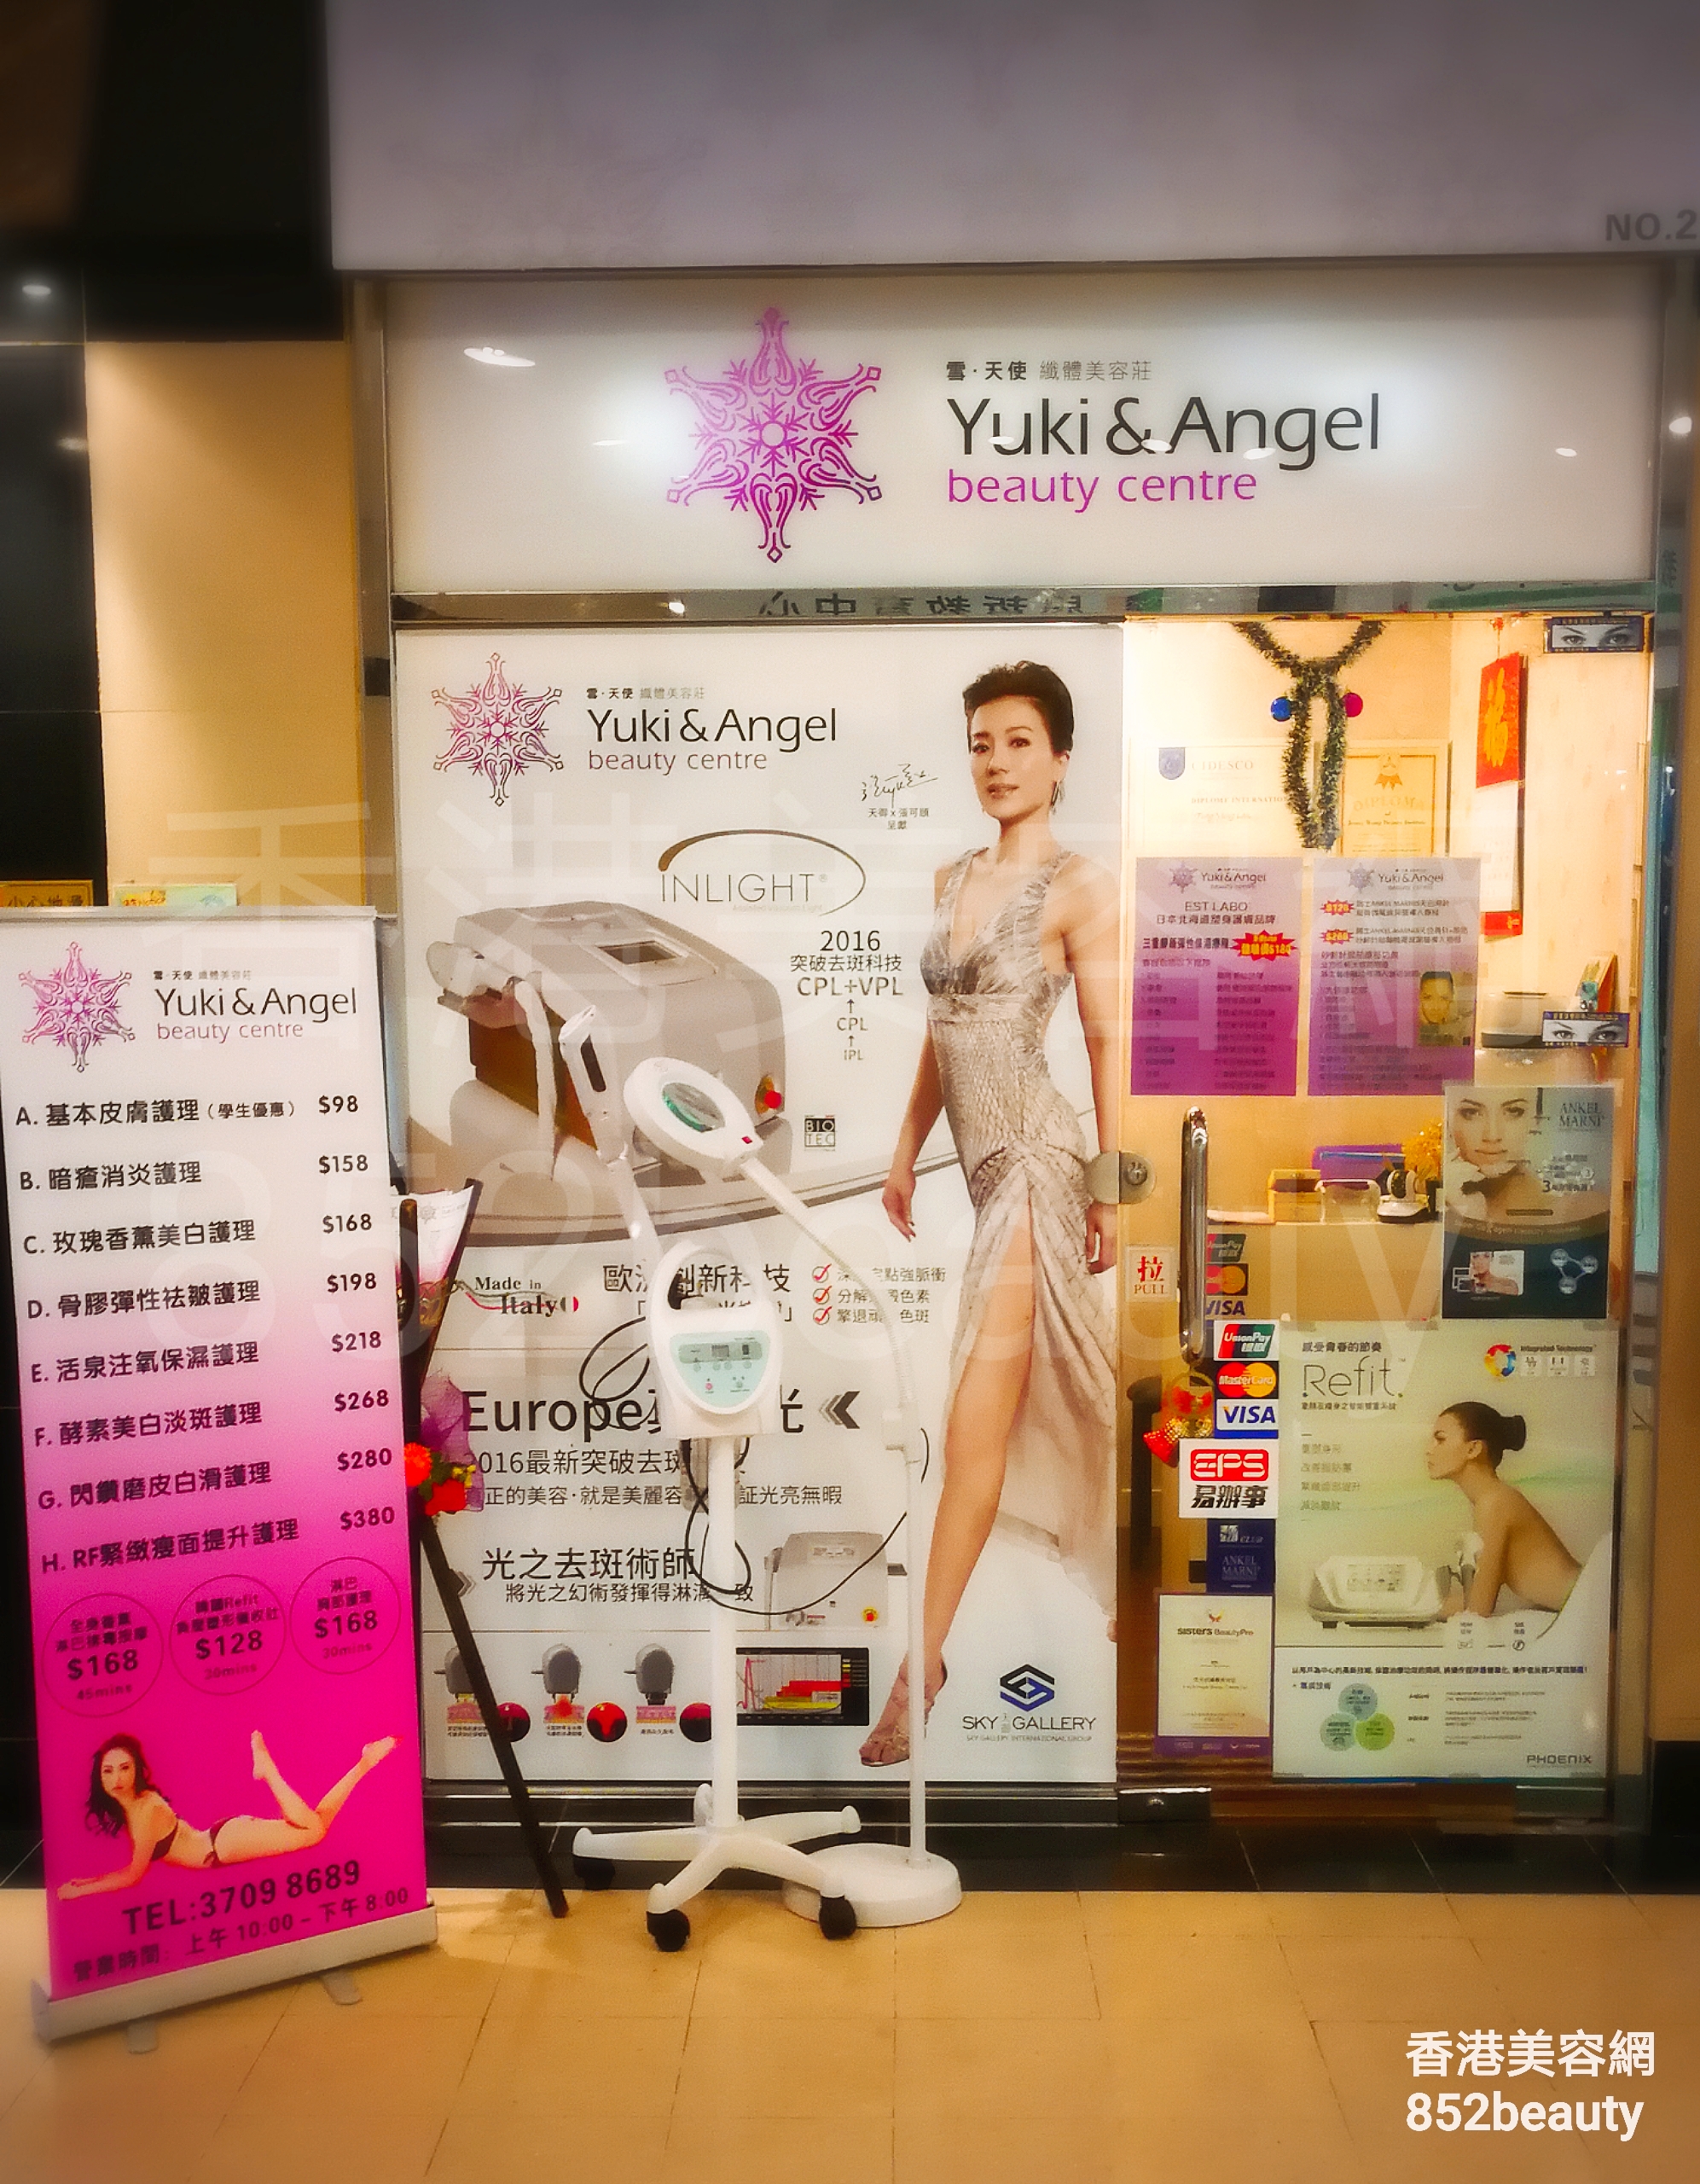 面部護理: Yuki & Angel beauty centre